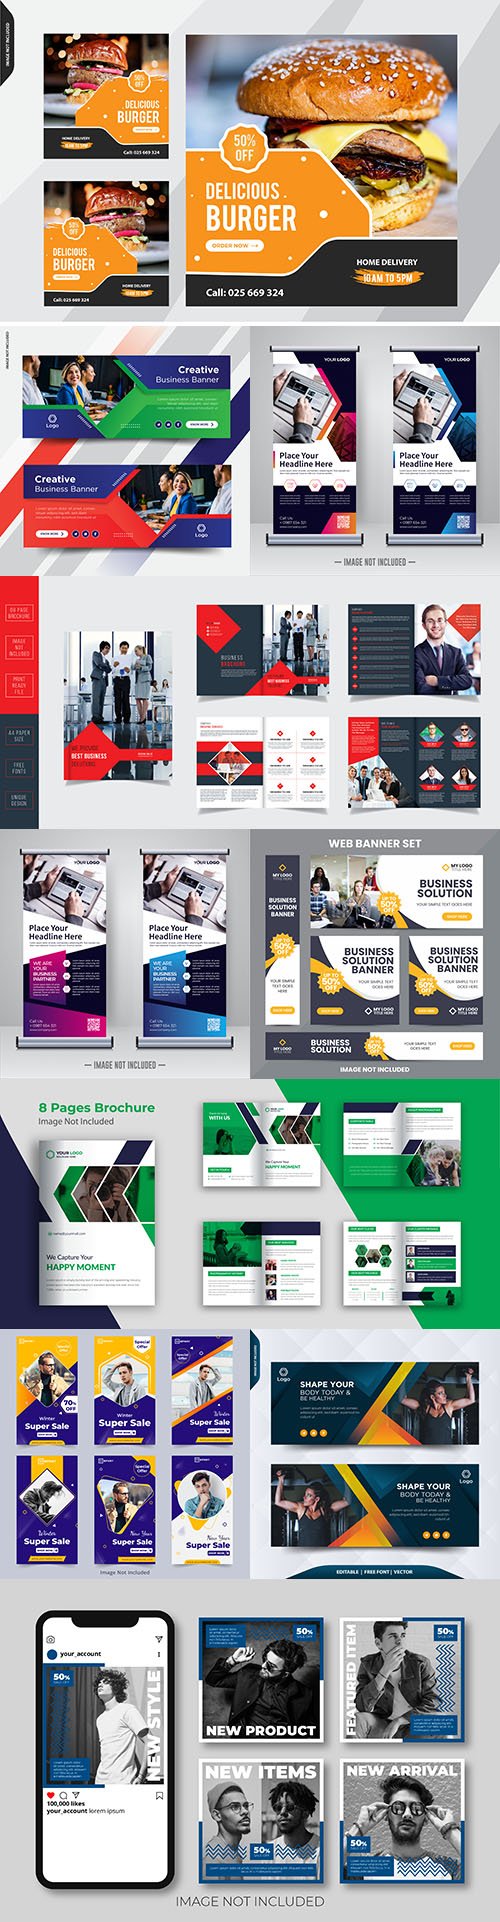 Business creative banner, brochures design template